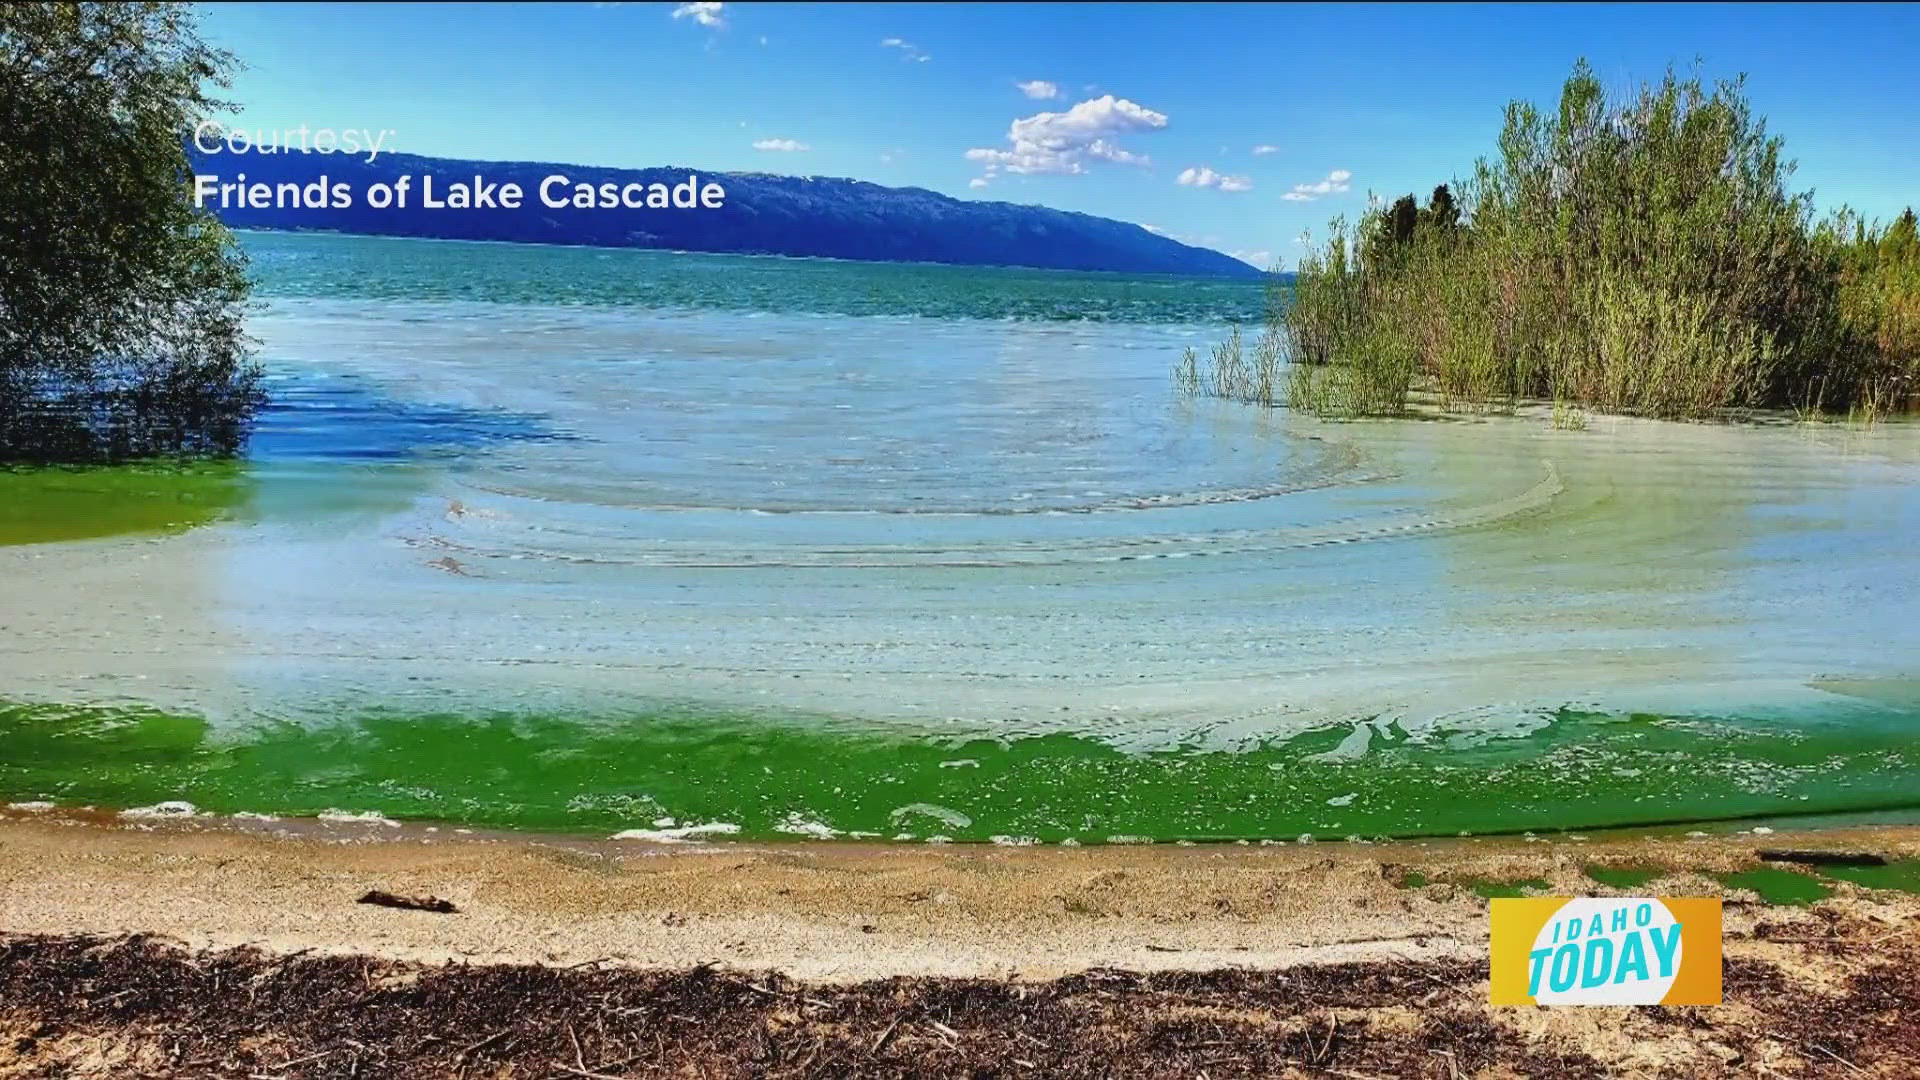 Idaho Health & Welfare teaches us about the dangers of blue-green algae.